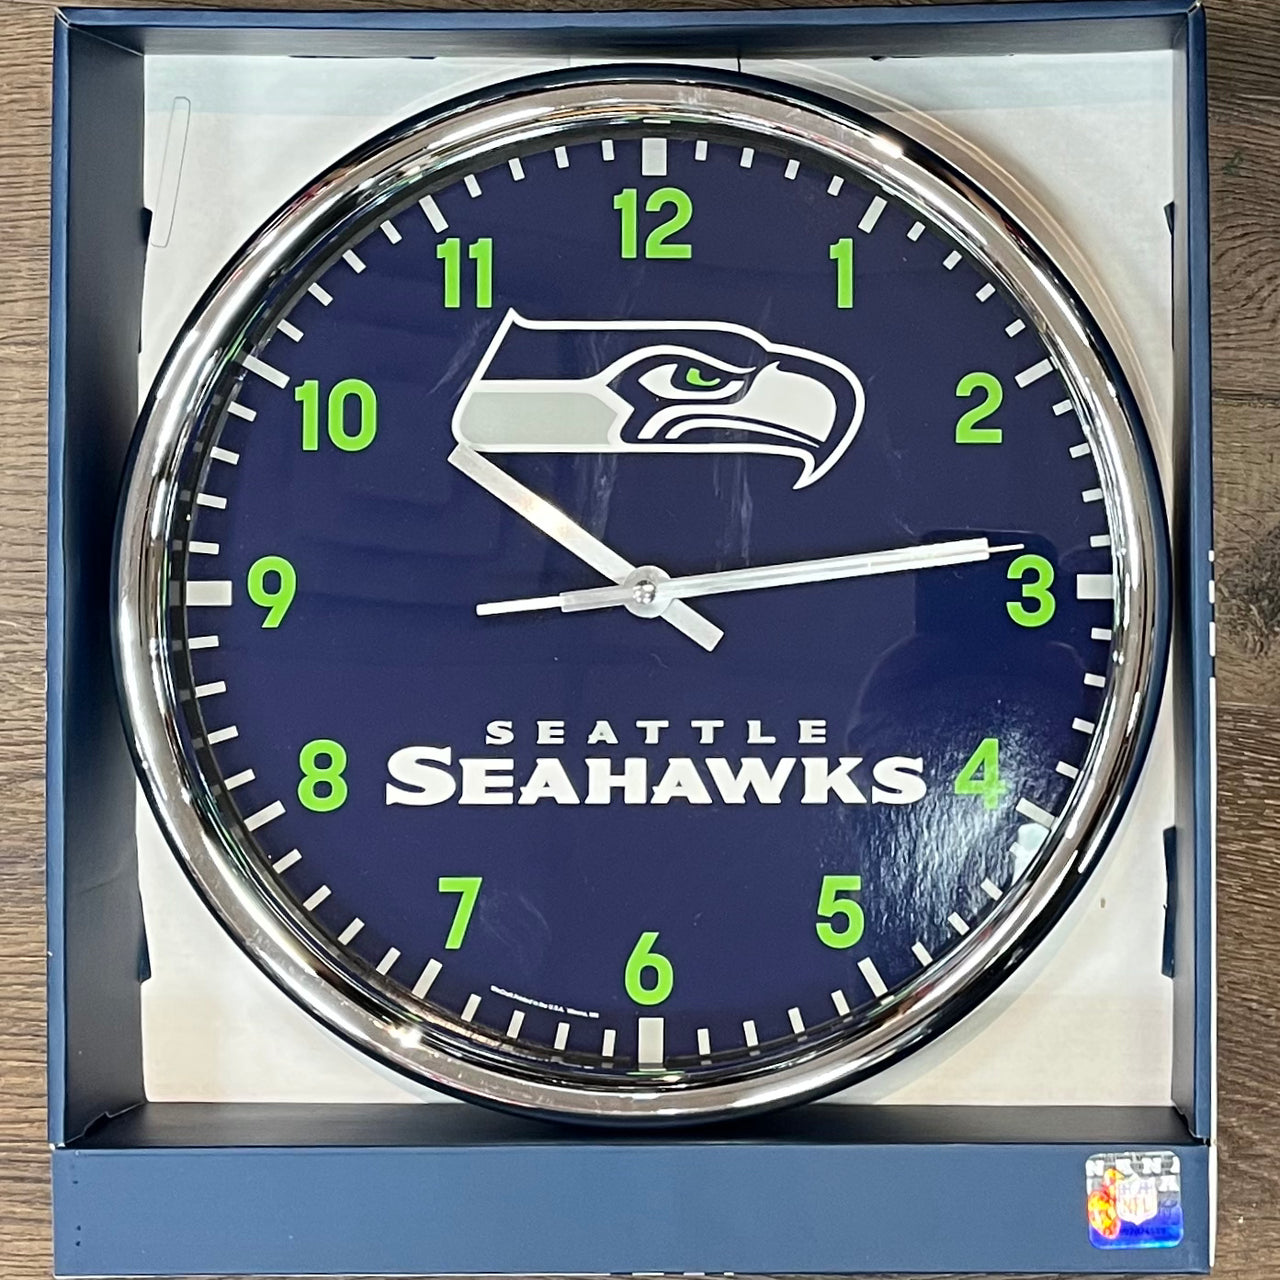 Seattle Seahawks Round Chrome Clock